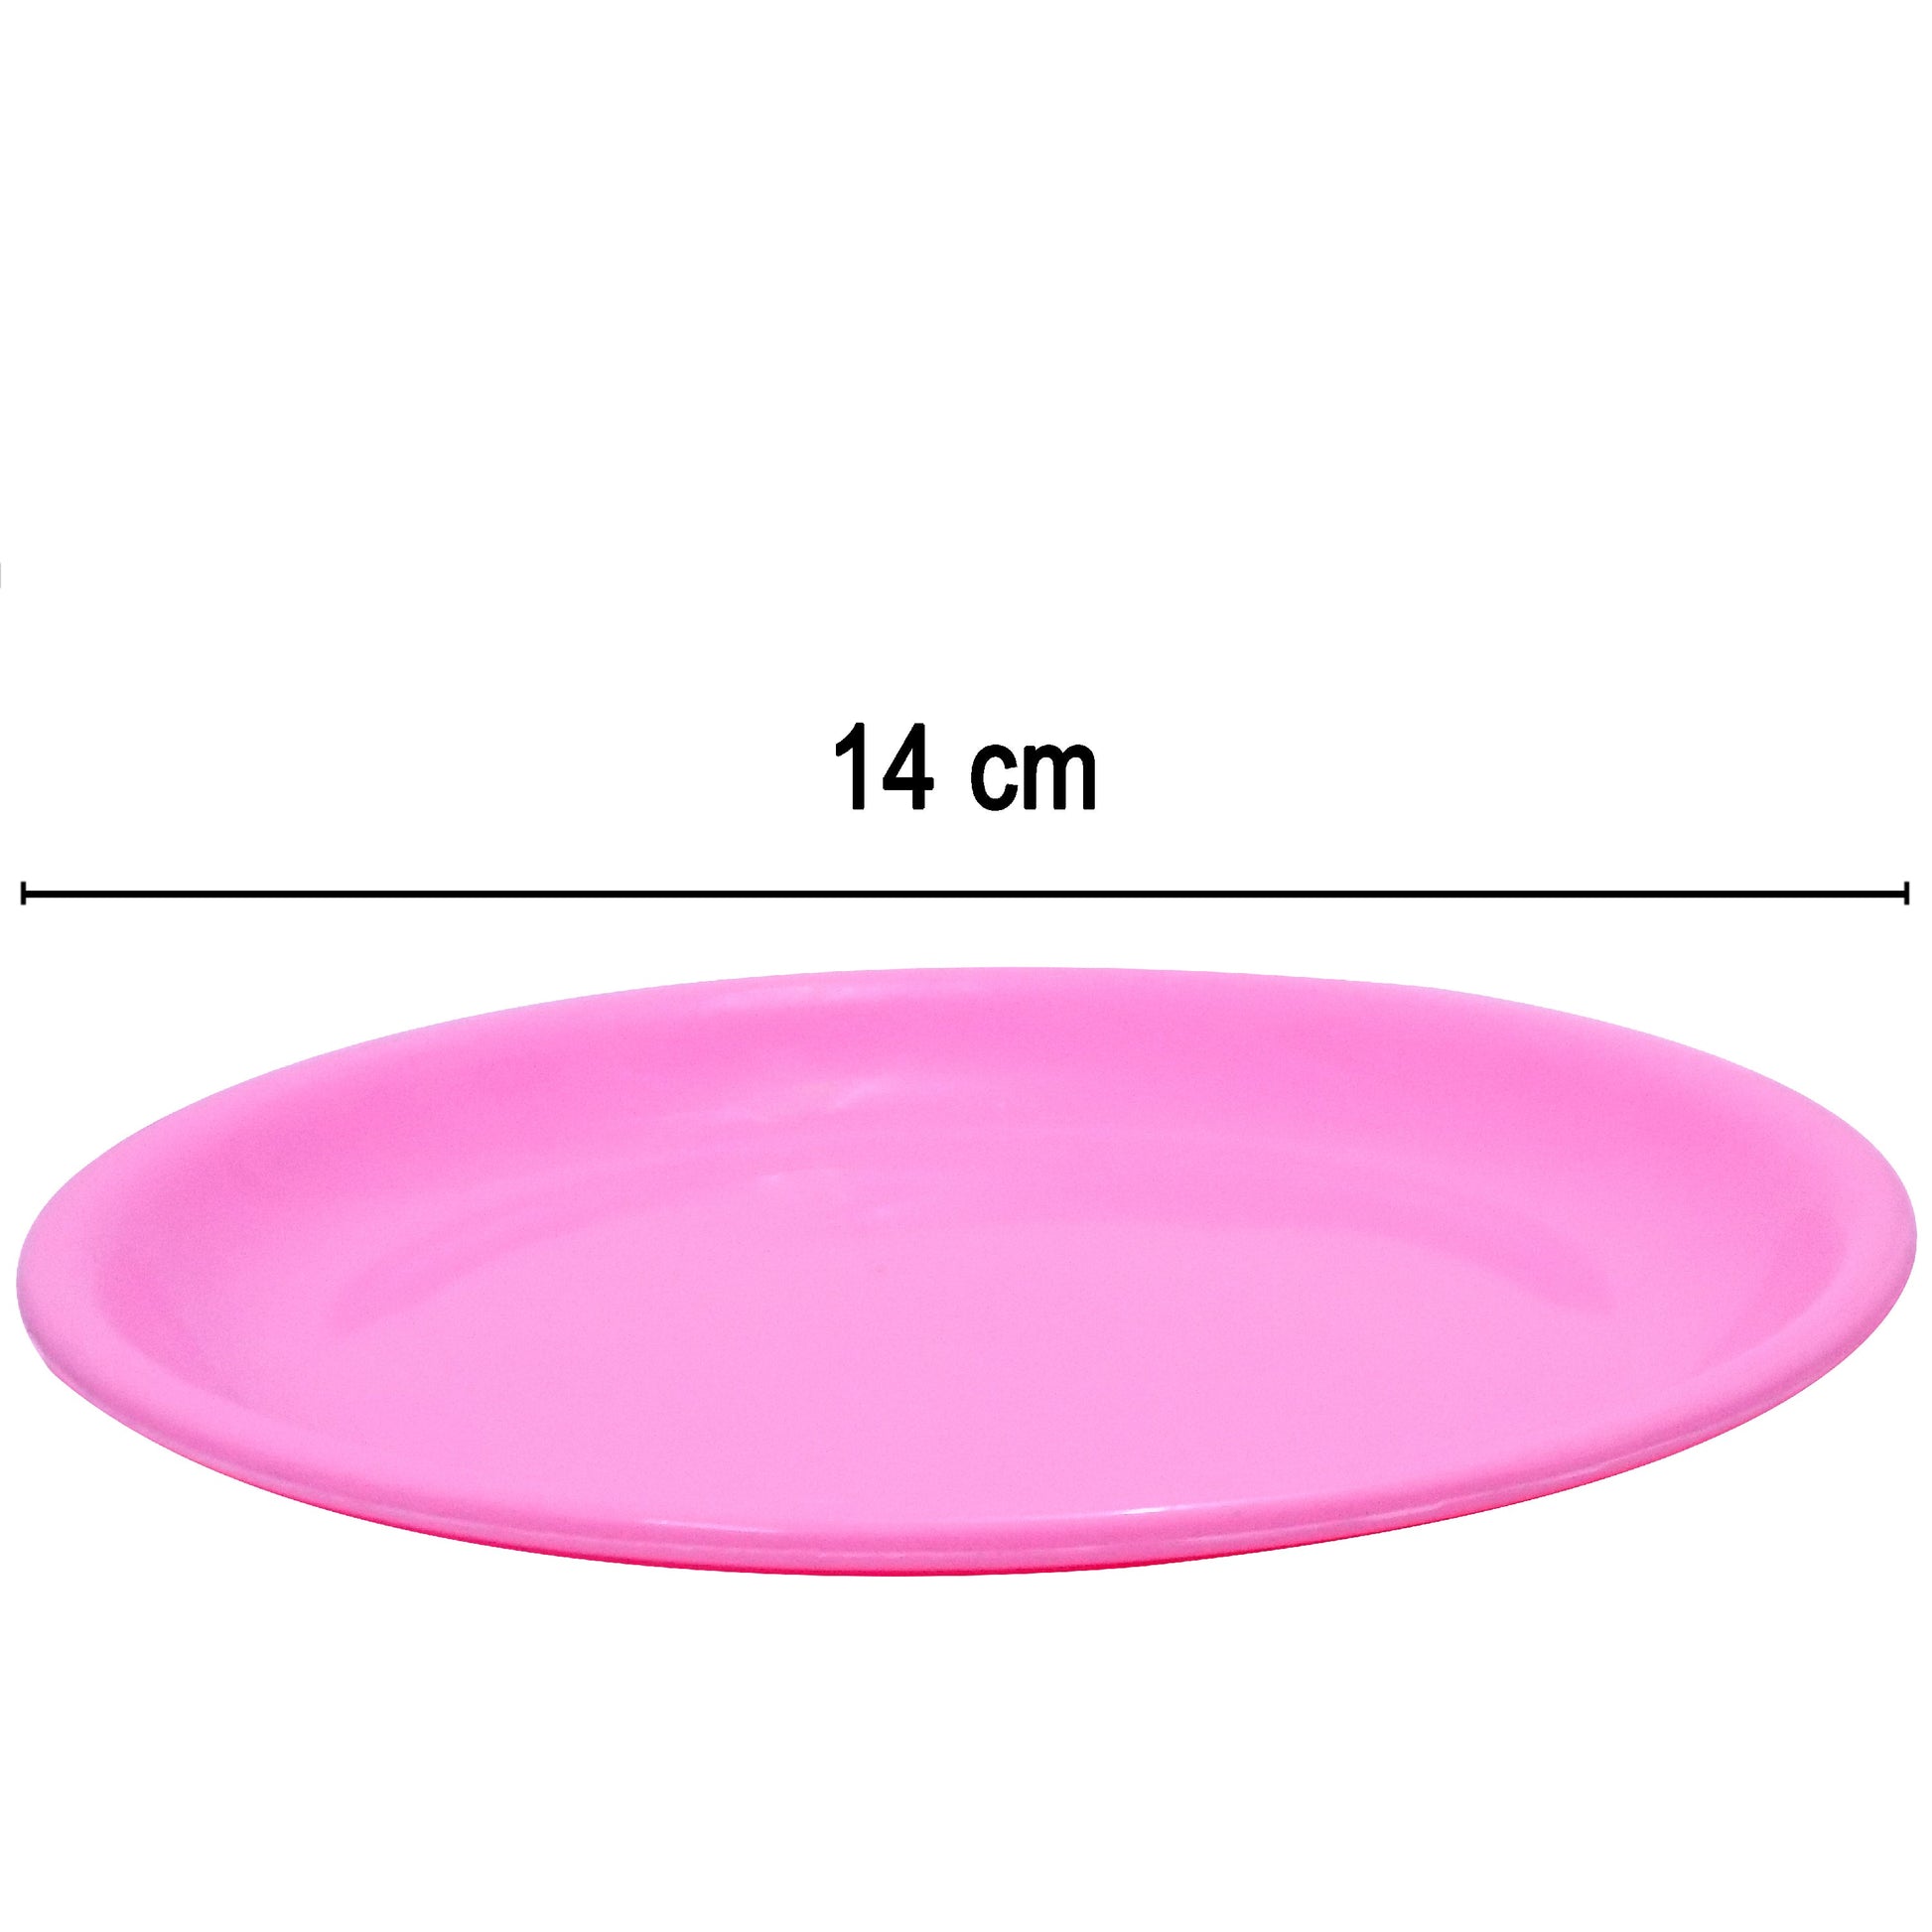 2185 Round Shaped Mini Soup Plates/Dishes - 6 pcs DeoDap